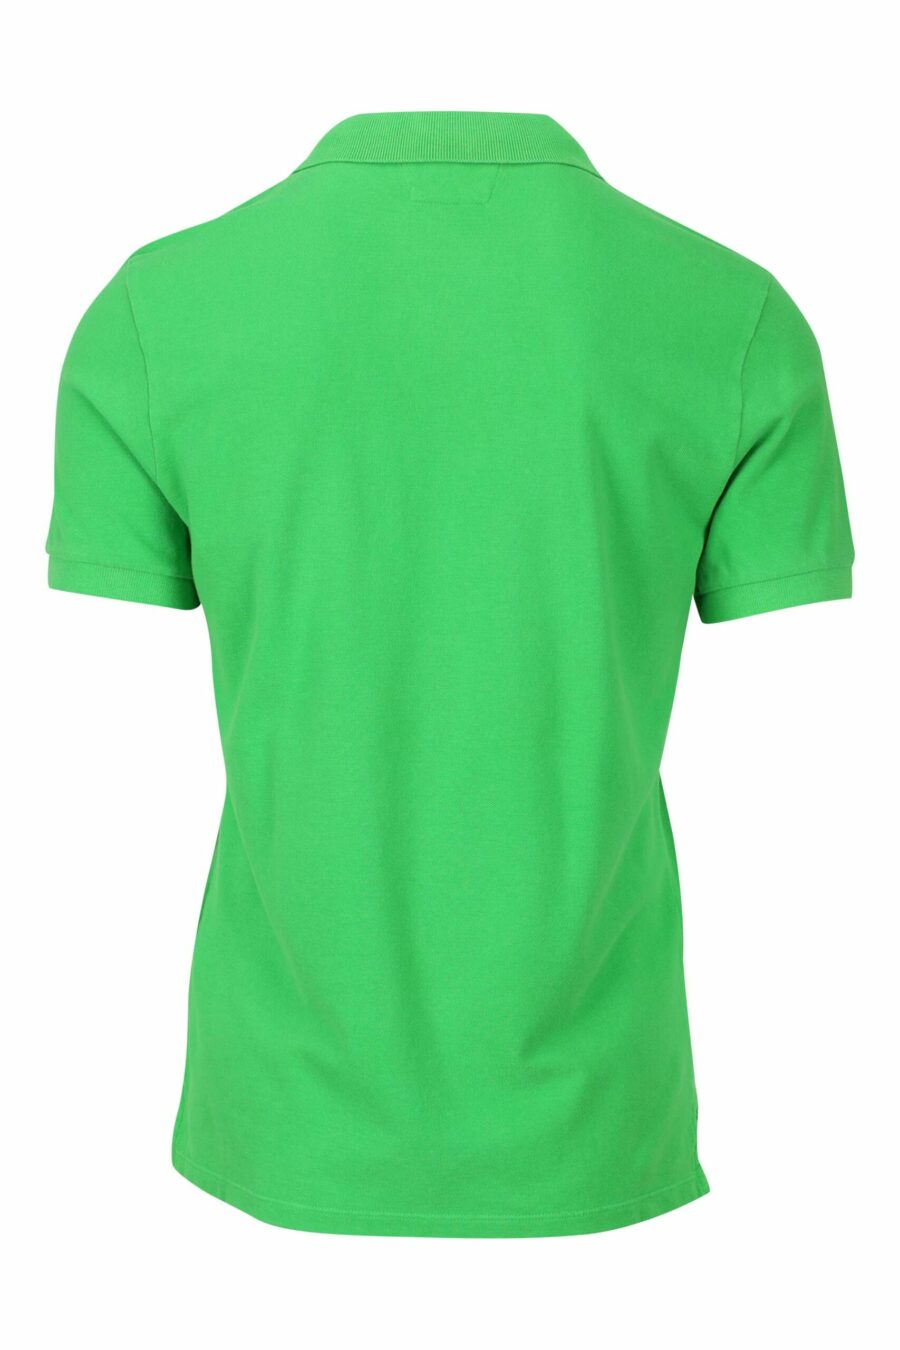 Grünes Poloshirt mit Mini-Logoaufnäher - 7620943642308 1 1 skaliert